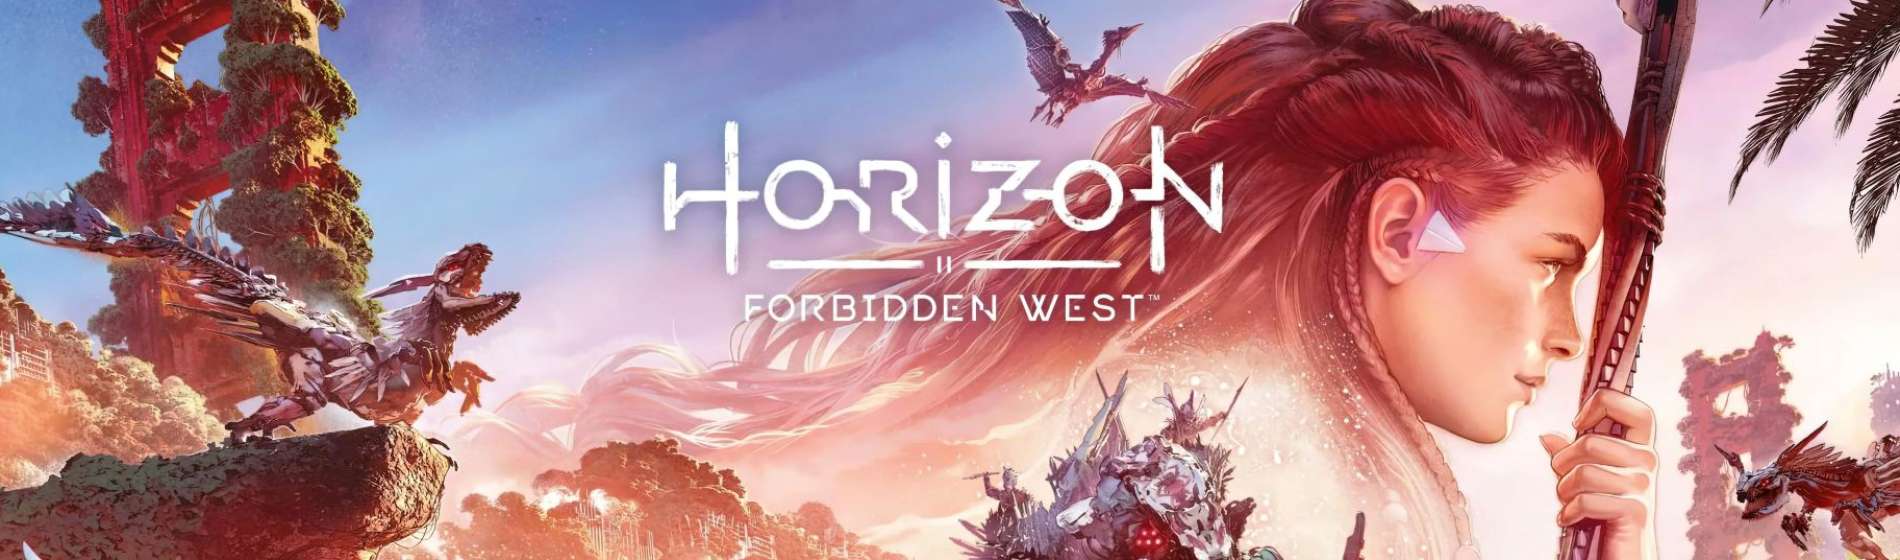 Horizon Forbidden West Review Featured